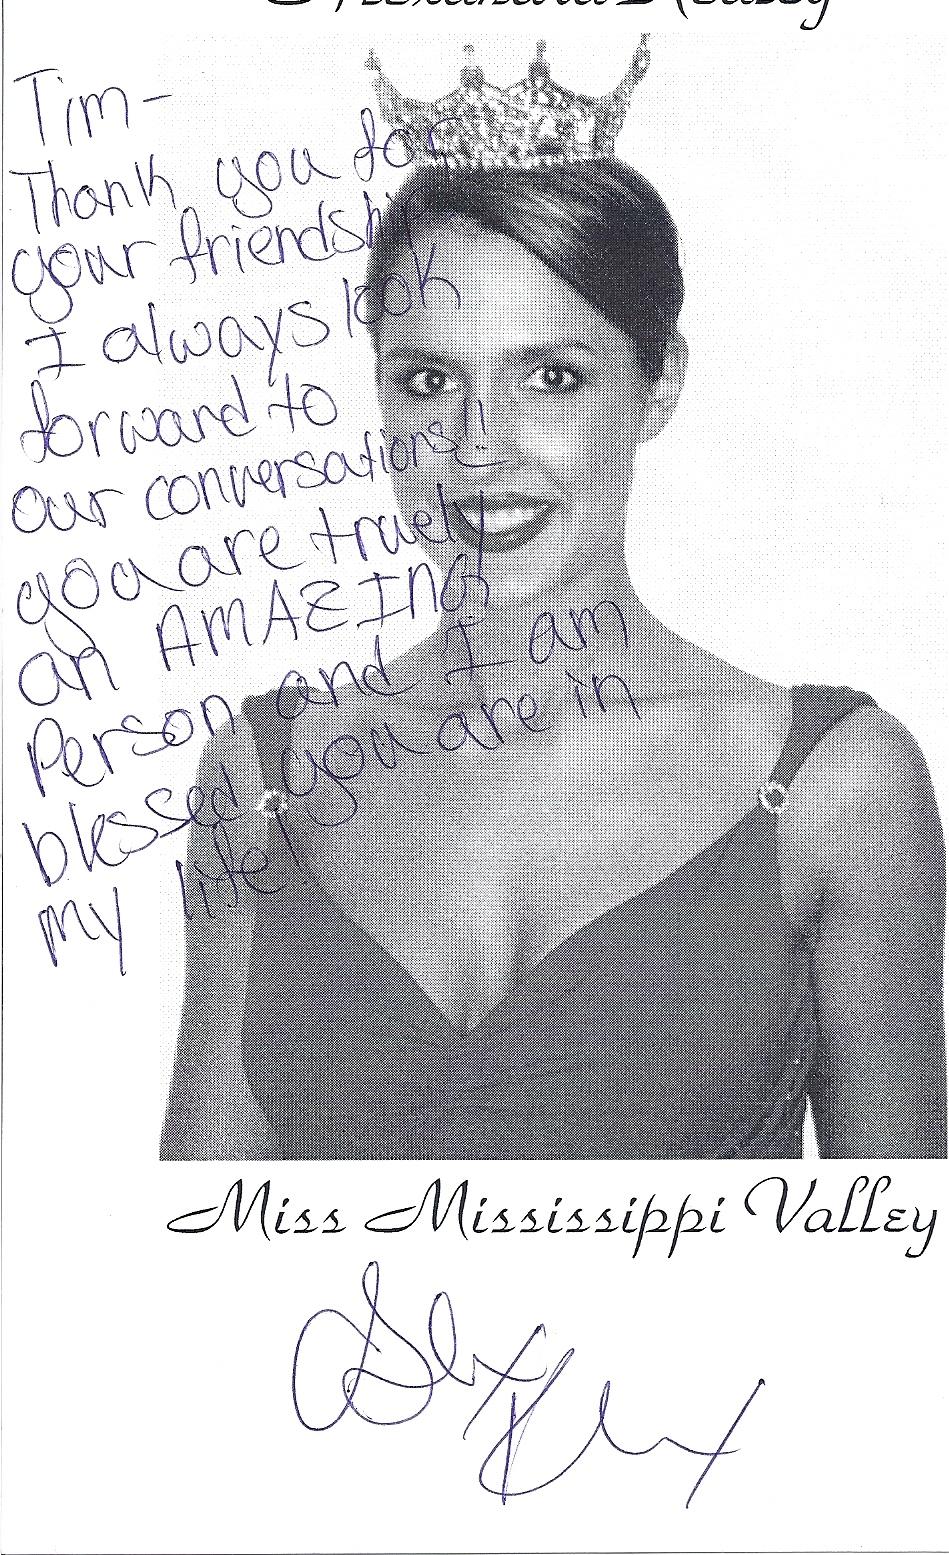 Alexandra Kealey, Miss Mississippi Valley